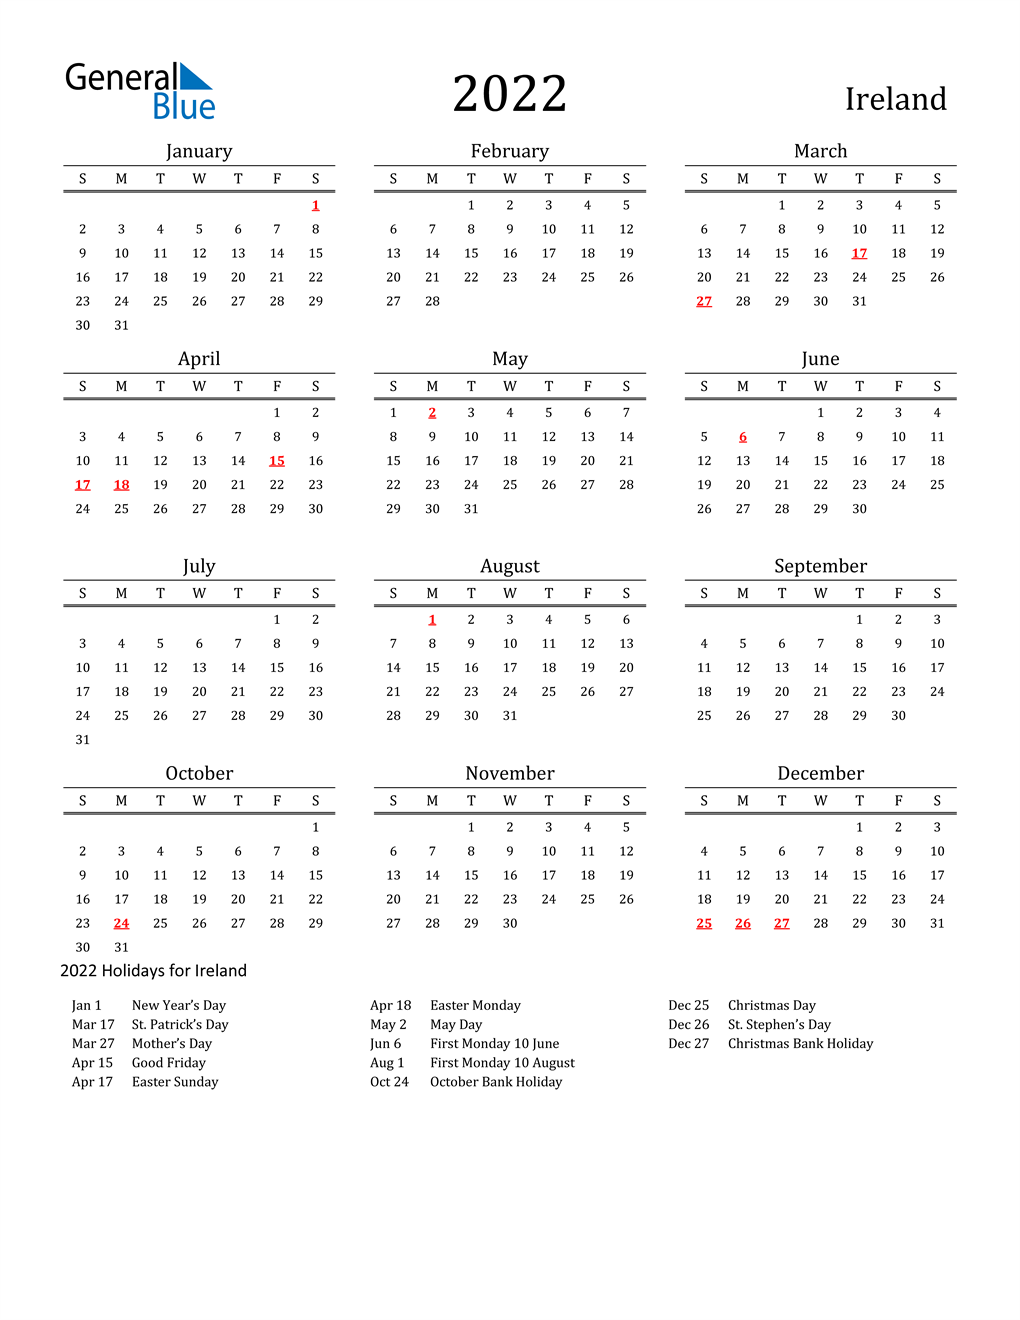 Sports Calendar 2022 Ireland.2022 Ireland Calendar With Holidays